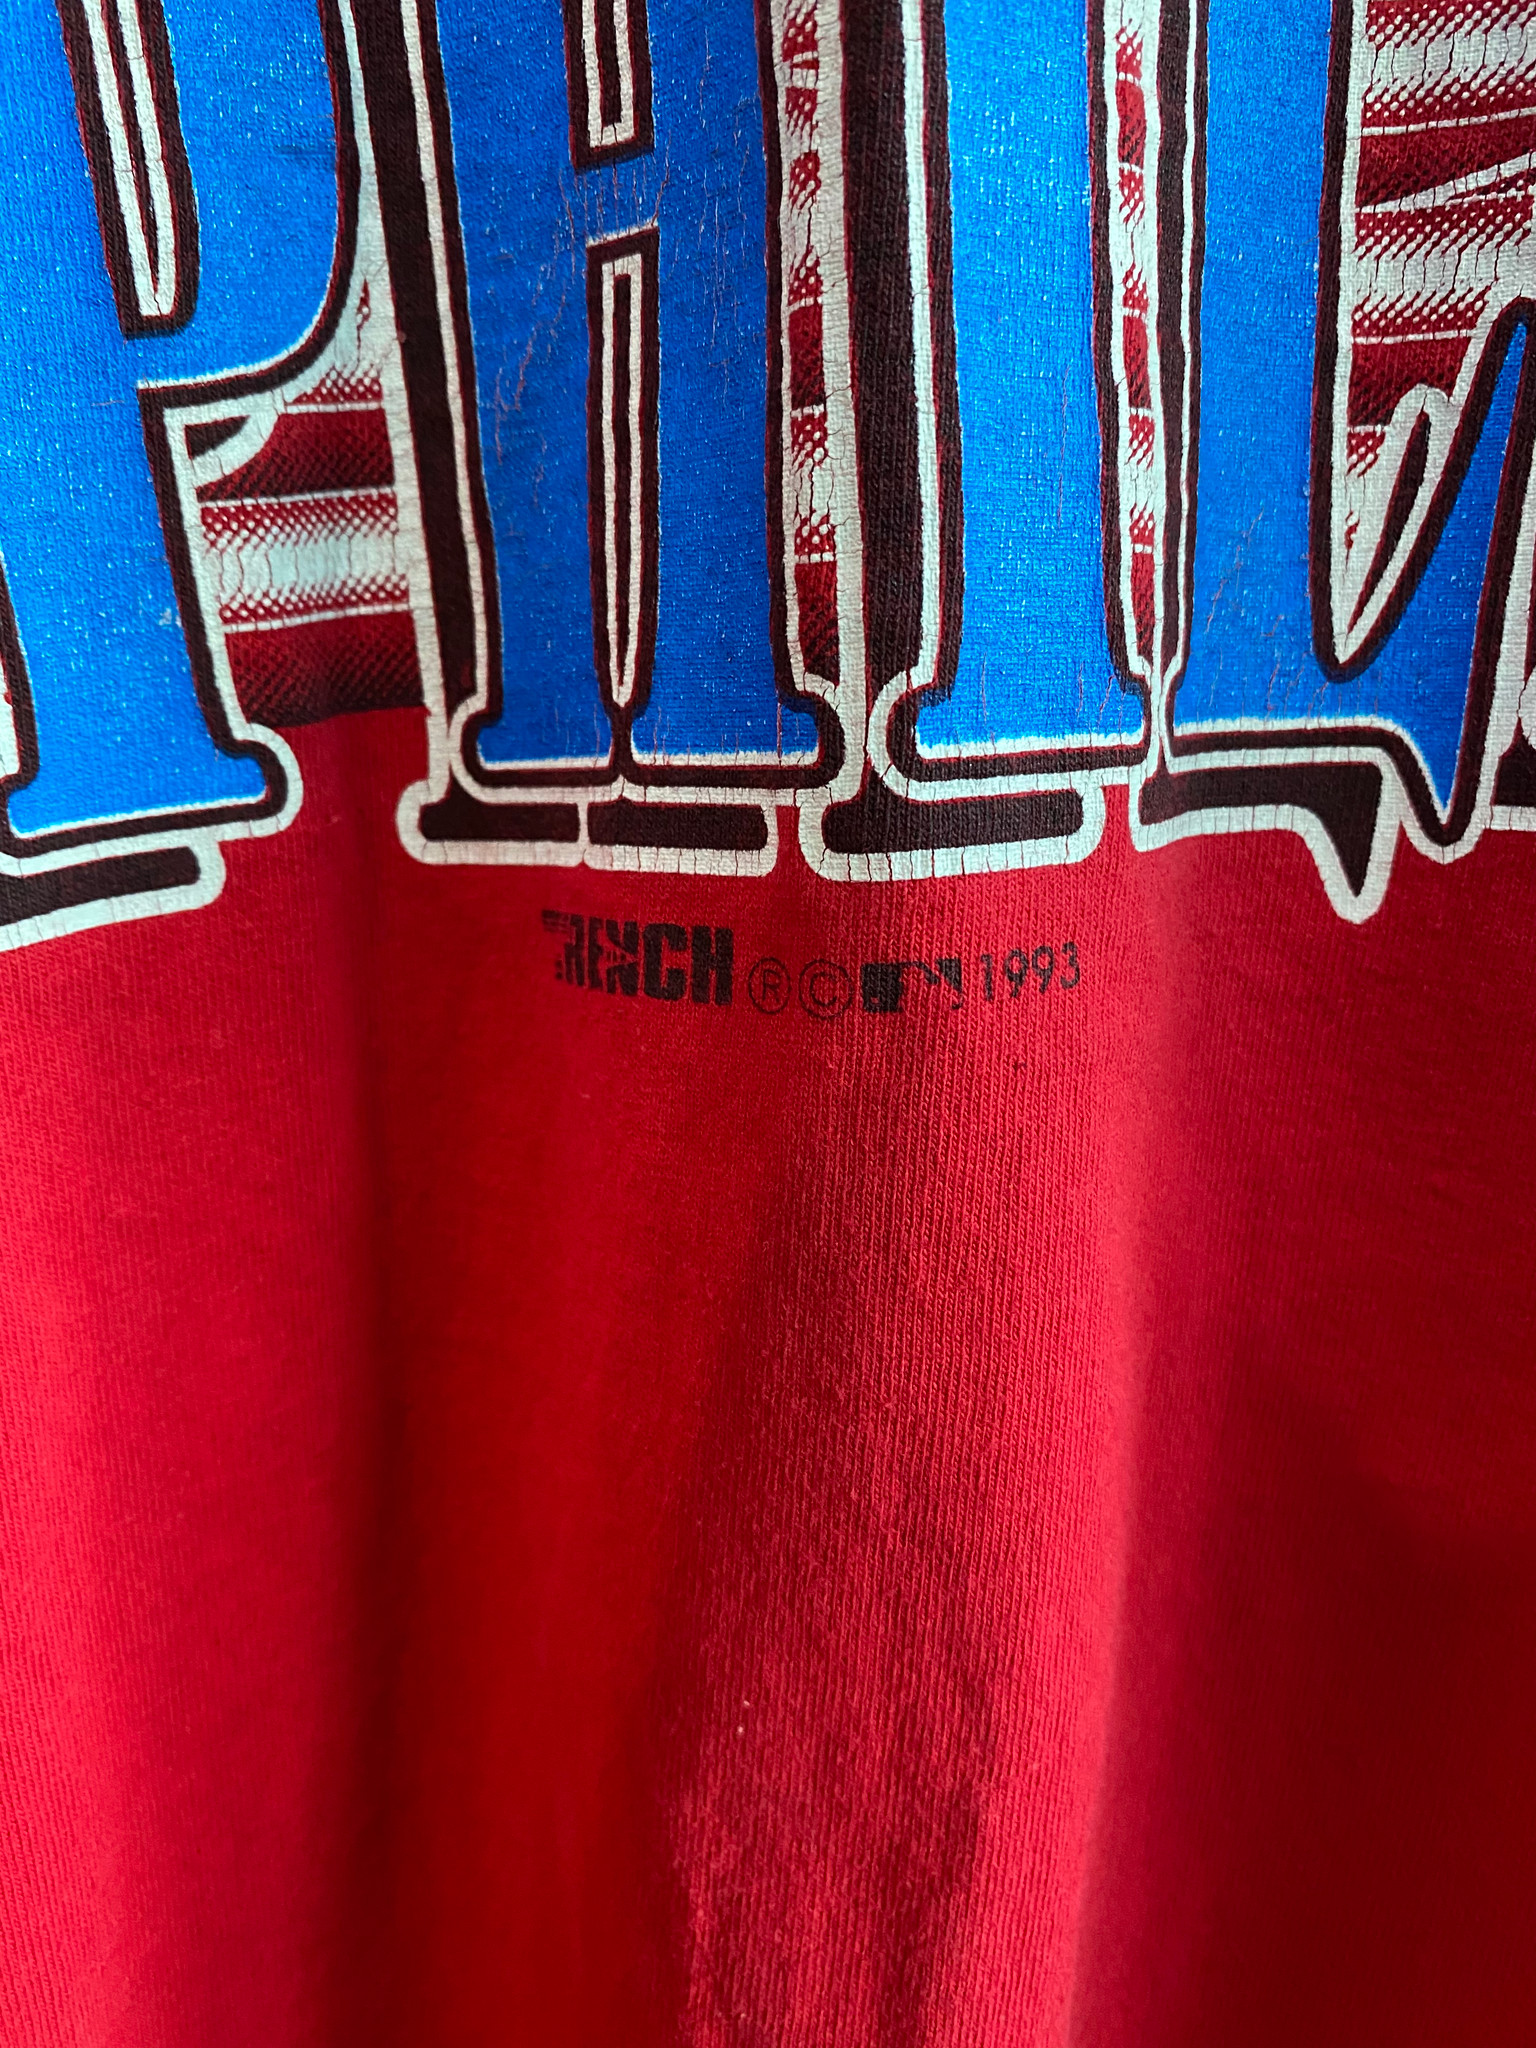 Philadelphia Phillies Vintage Shirts and Hats Tagged t-shirt